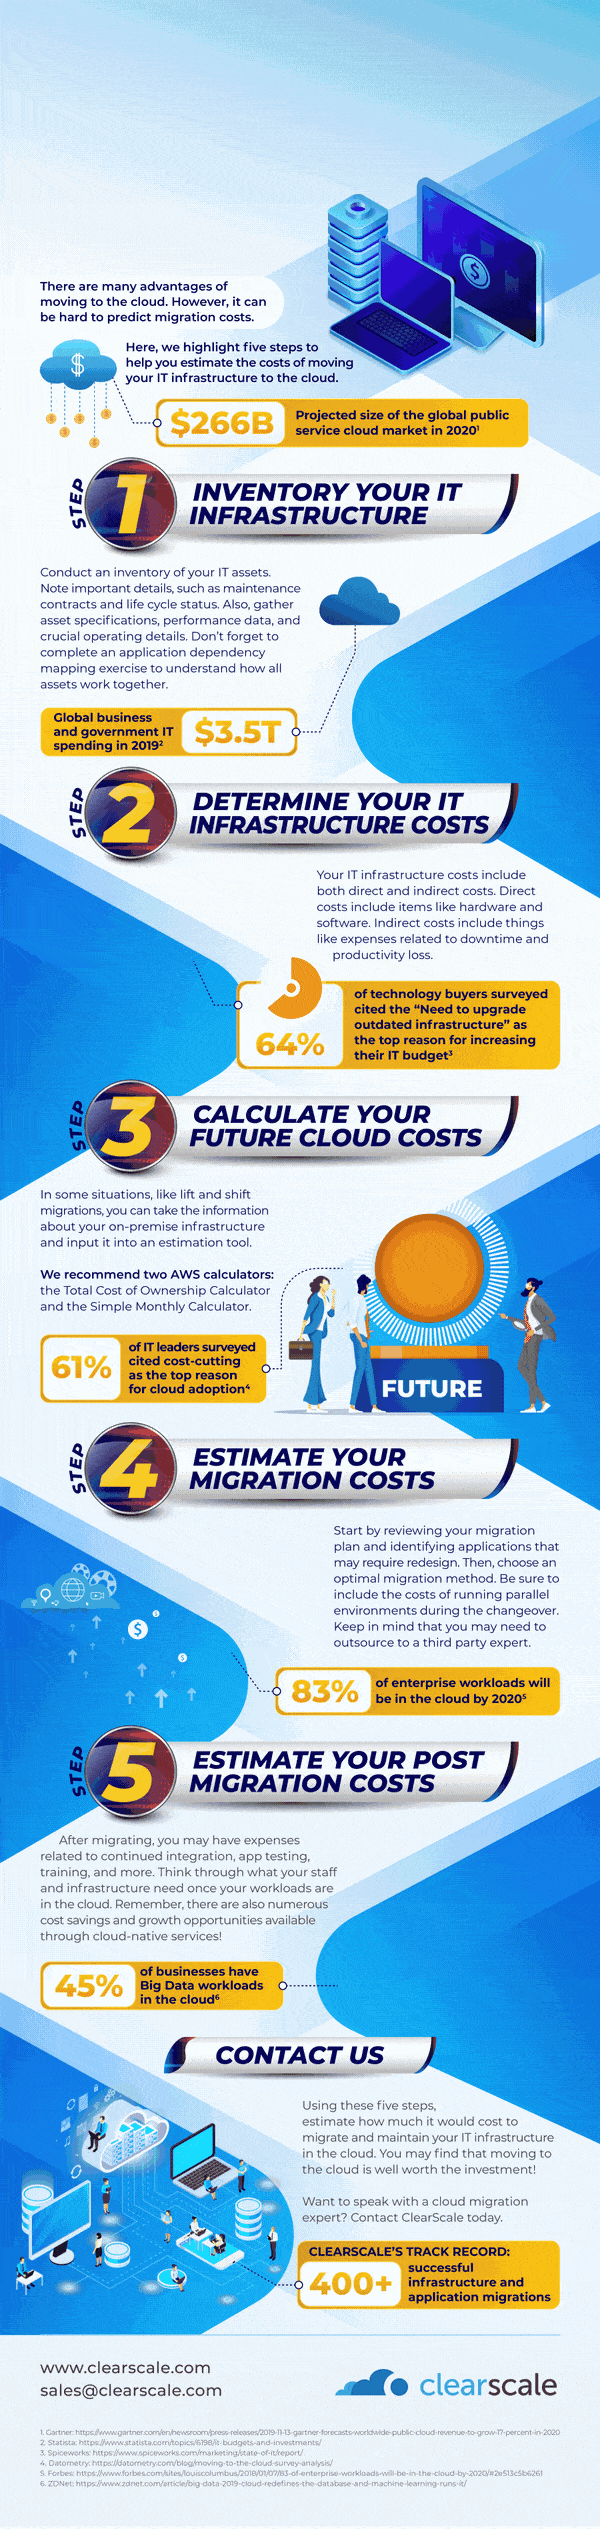 5 Steps to Estimate Your Cloud Migration Costs